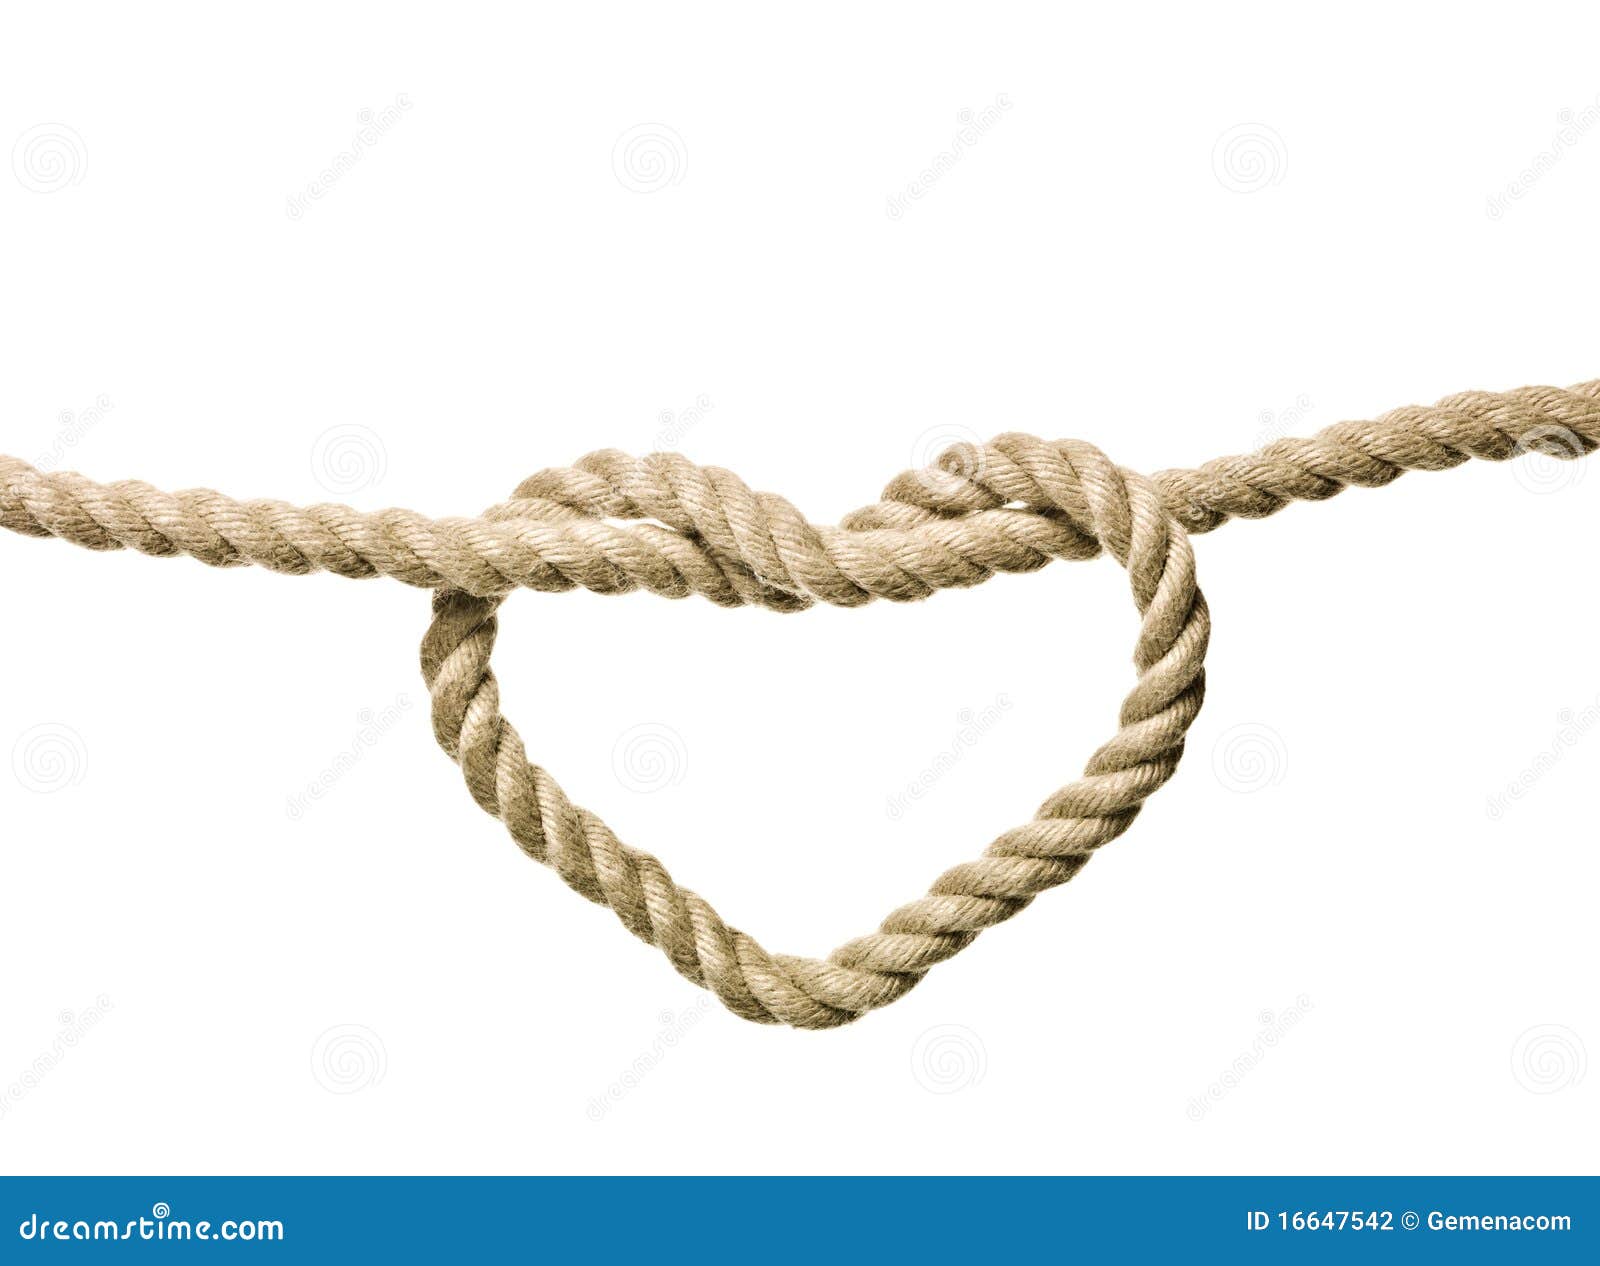 clipart heart knot - photo #6